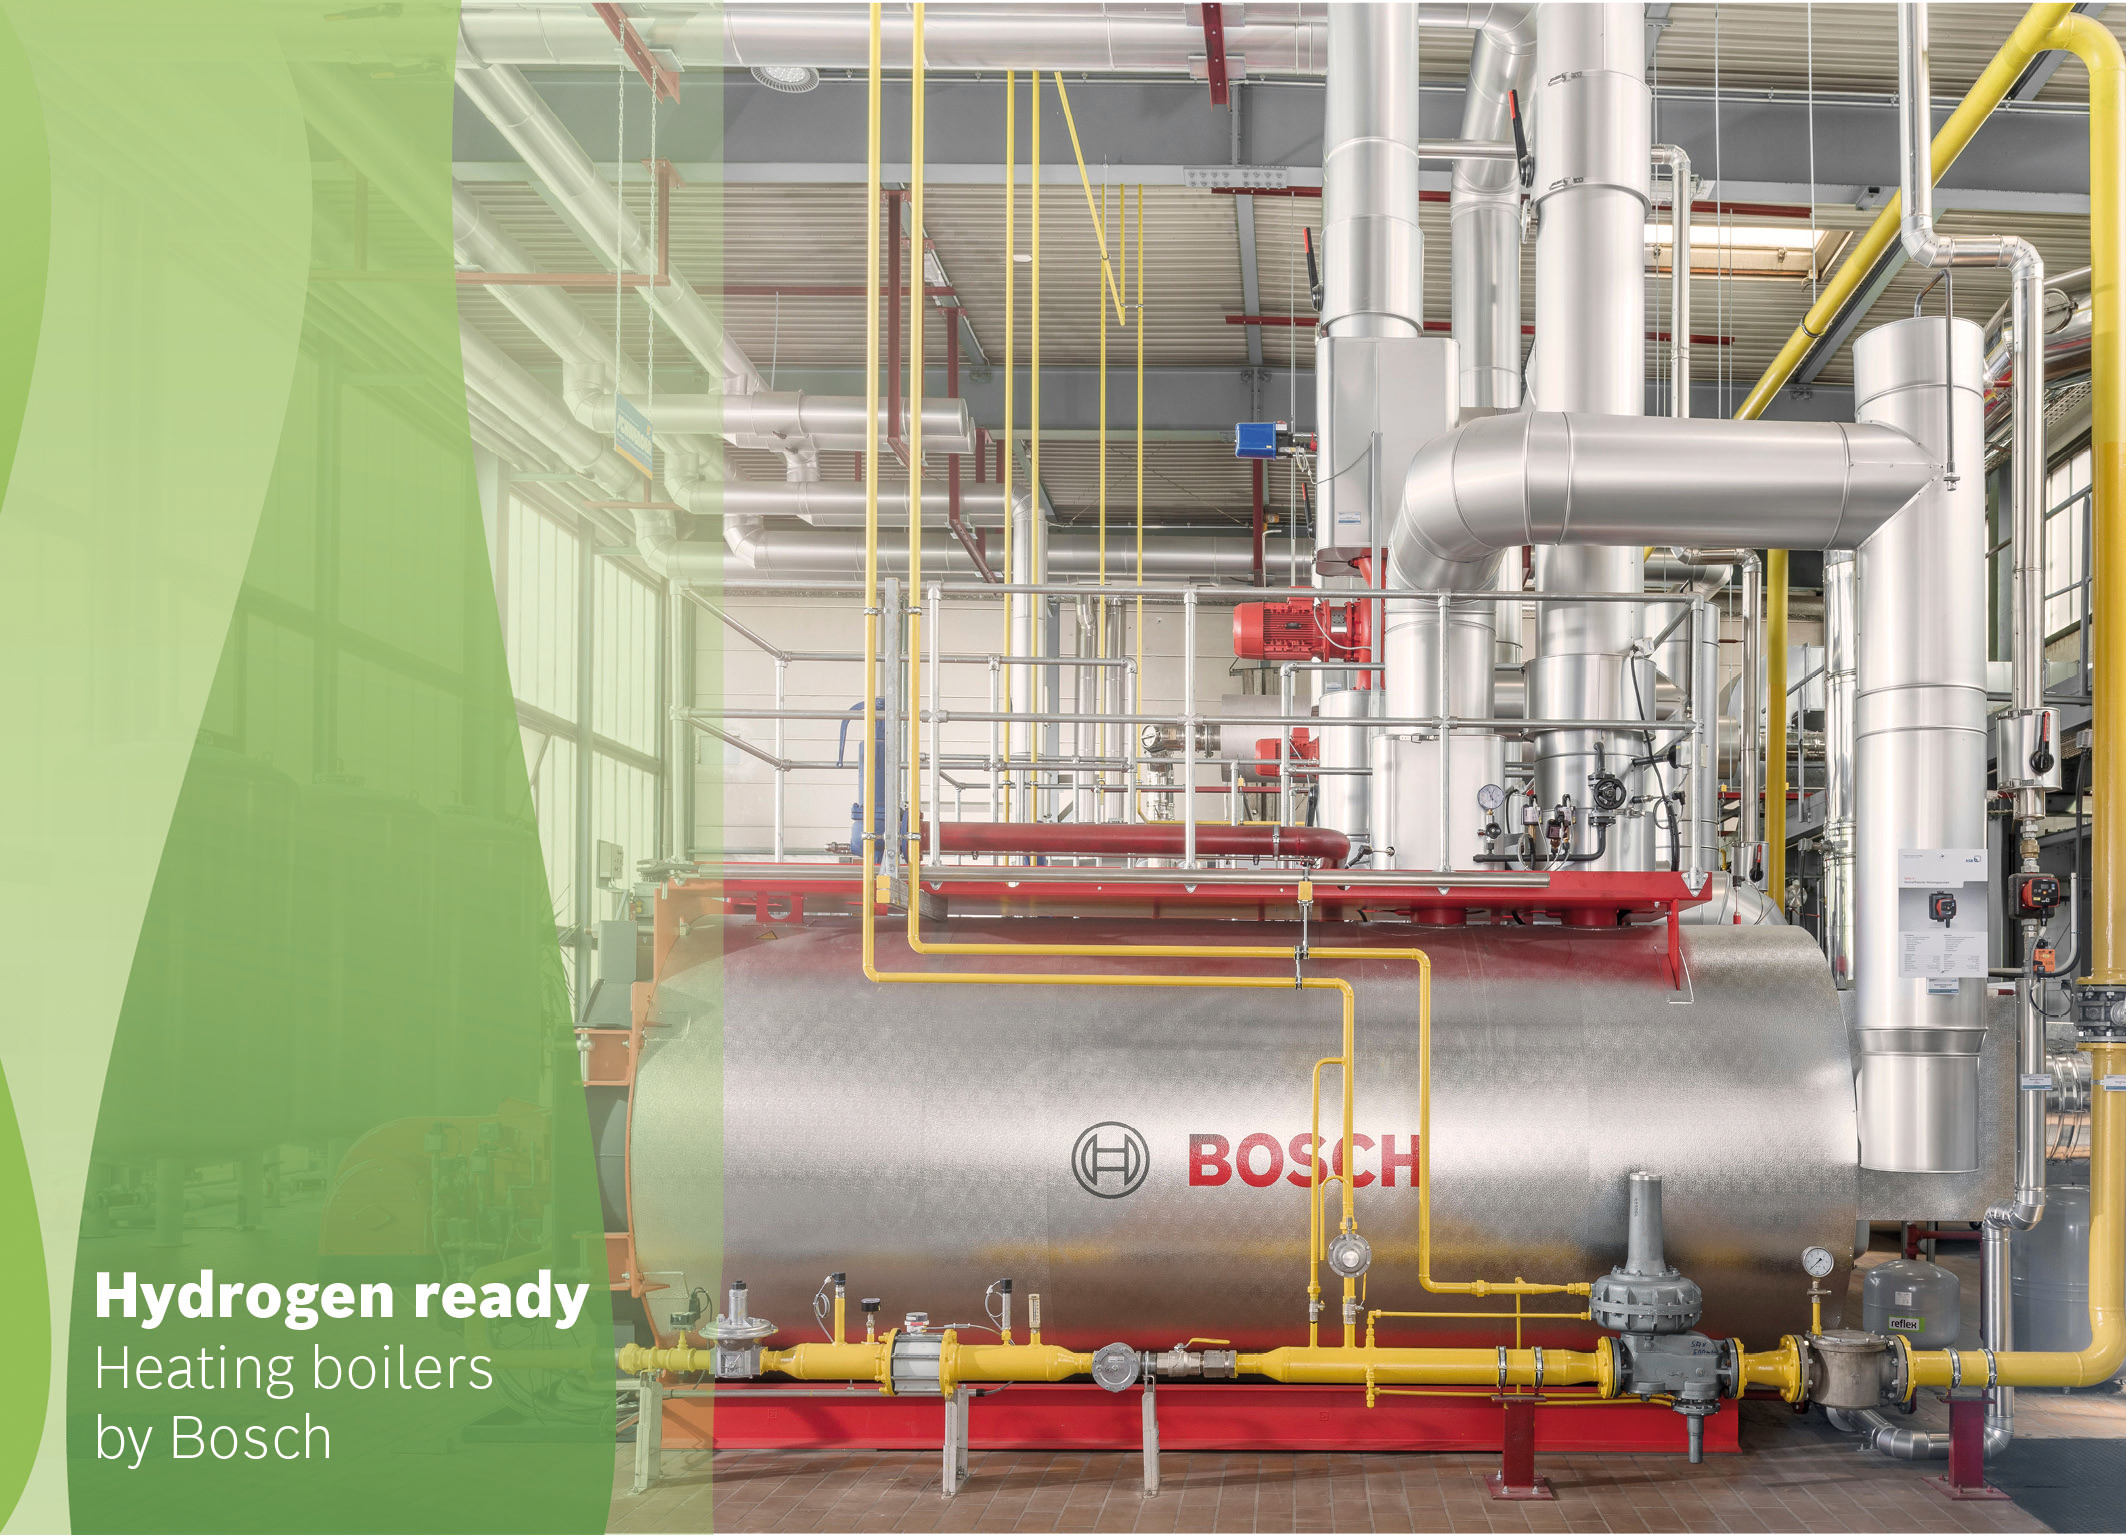 Hydrogen powered industrial boilers from Bosch